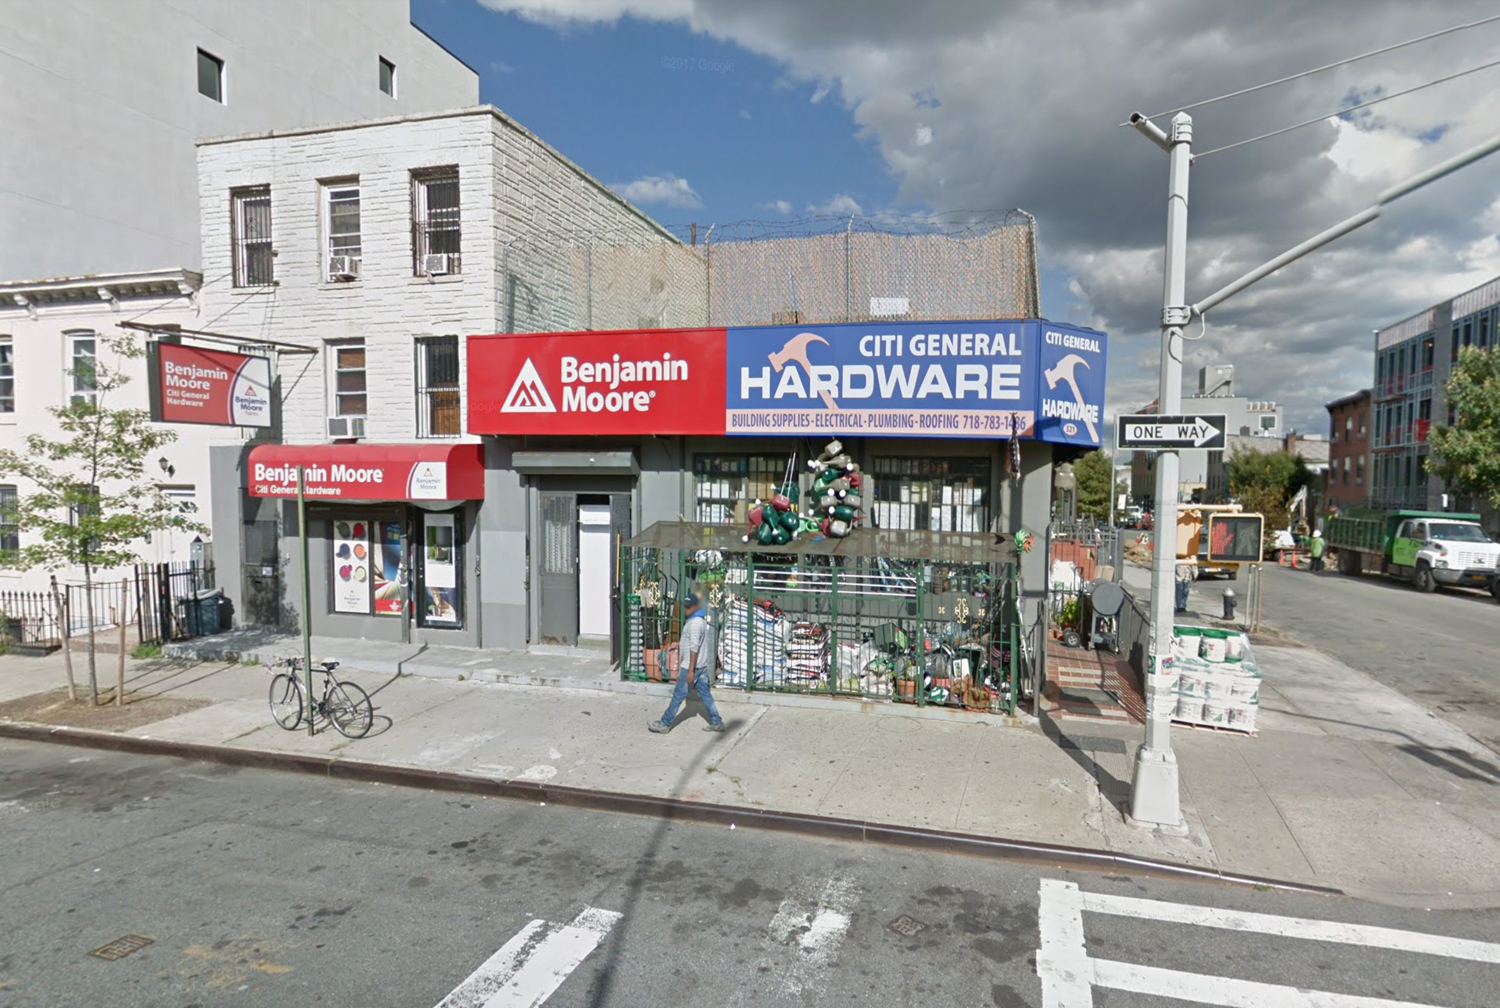 321 Franklin Avenue hardware store, via Google Maps